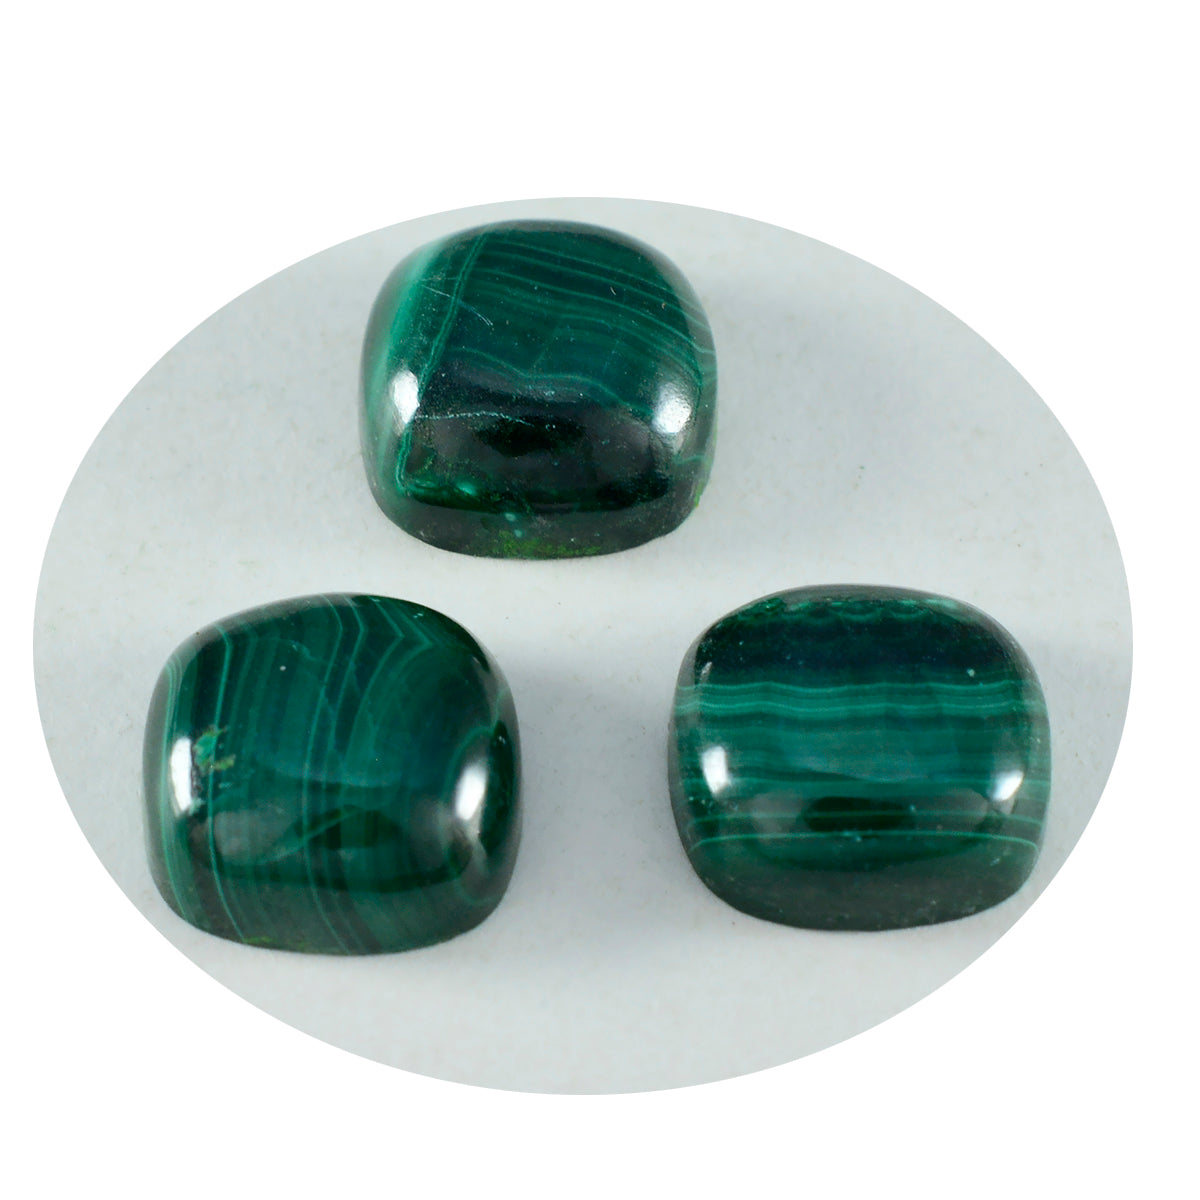 riyogems 1pc グリーン マラカイト カボション 9x9 mm クッション形状の素晴らしい品質のルース宝石